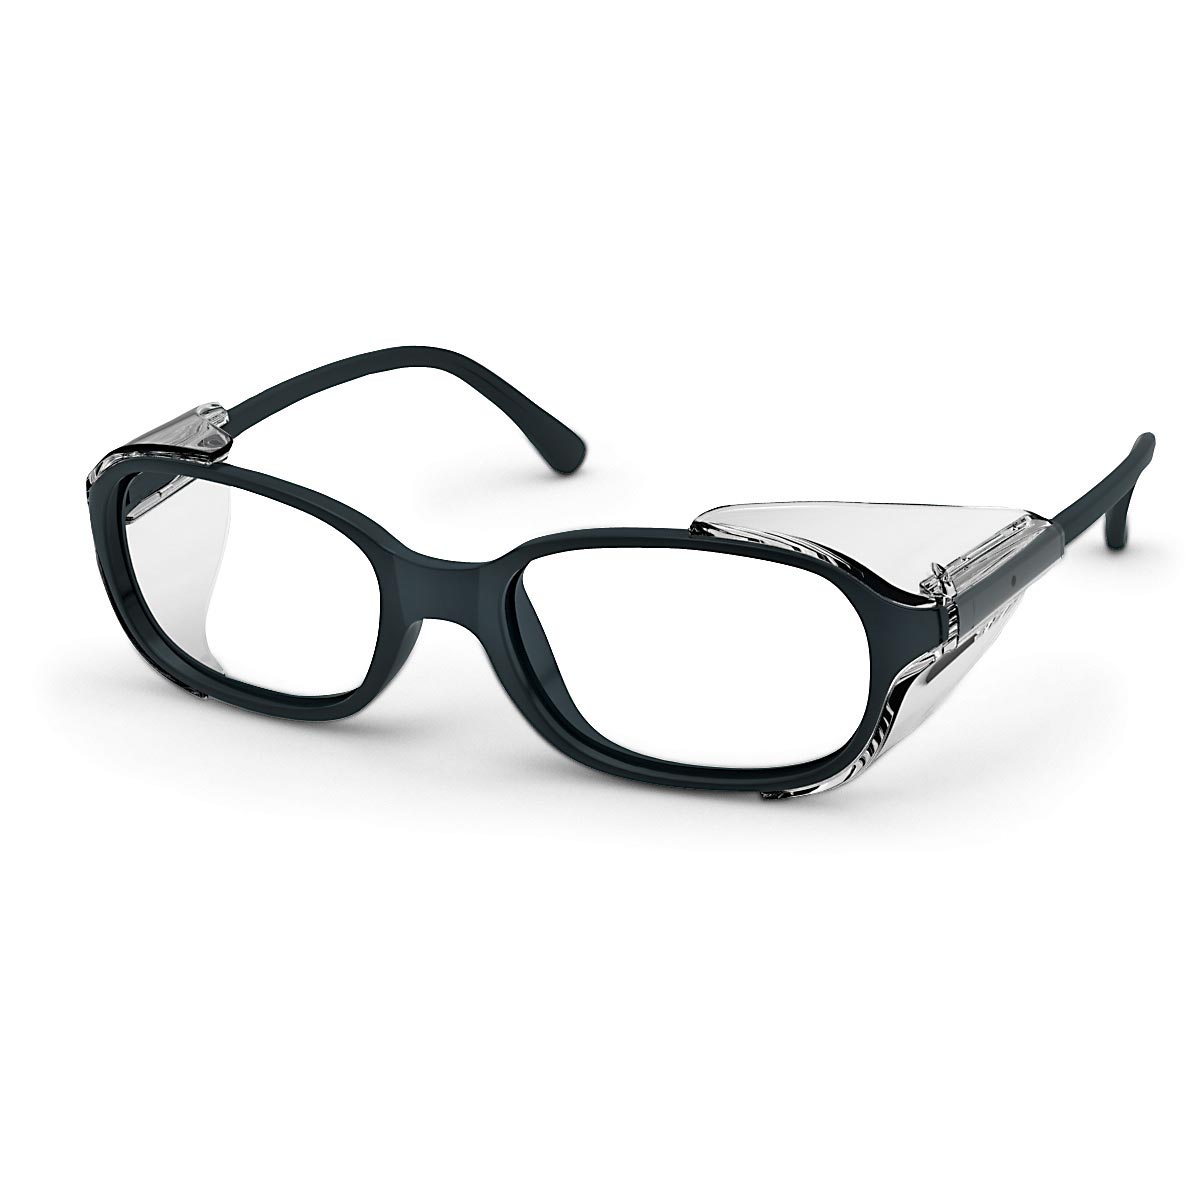 Uvex prescription safety glasses RX 5503